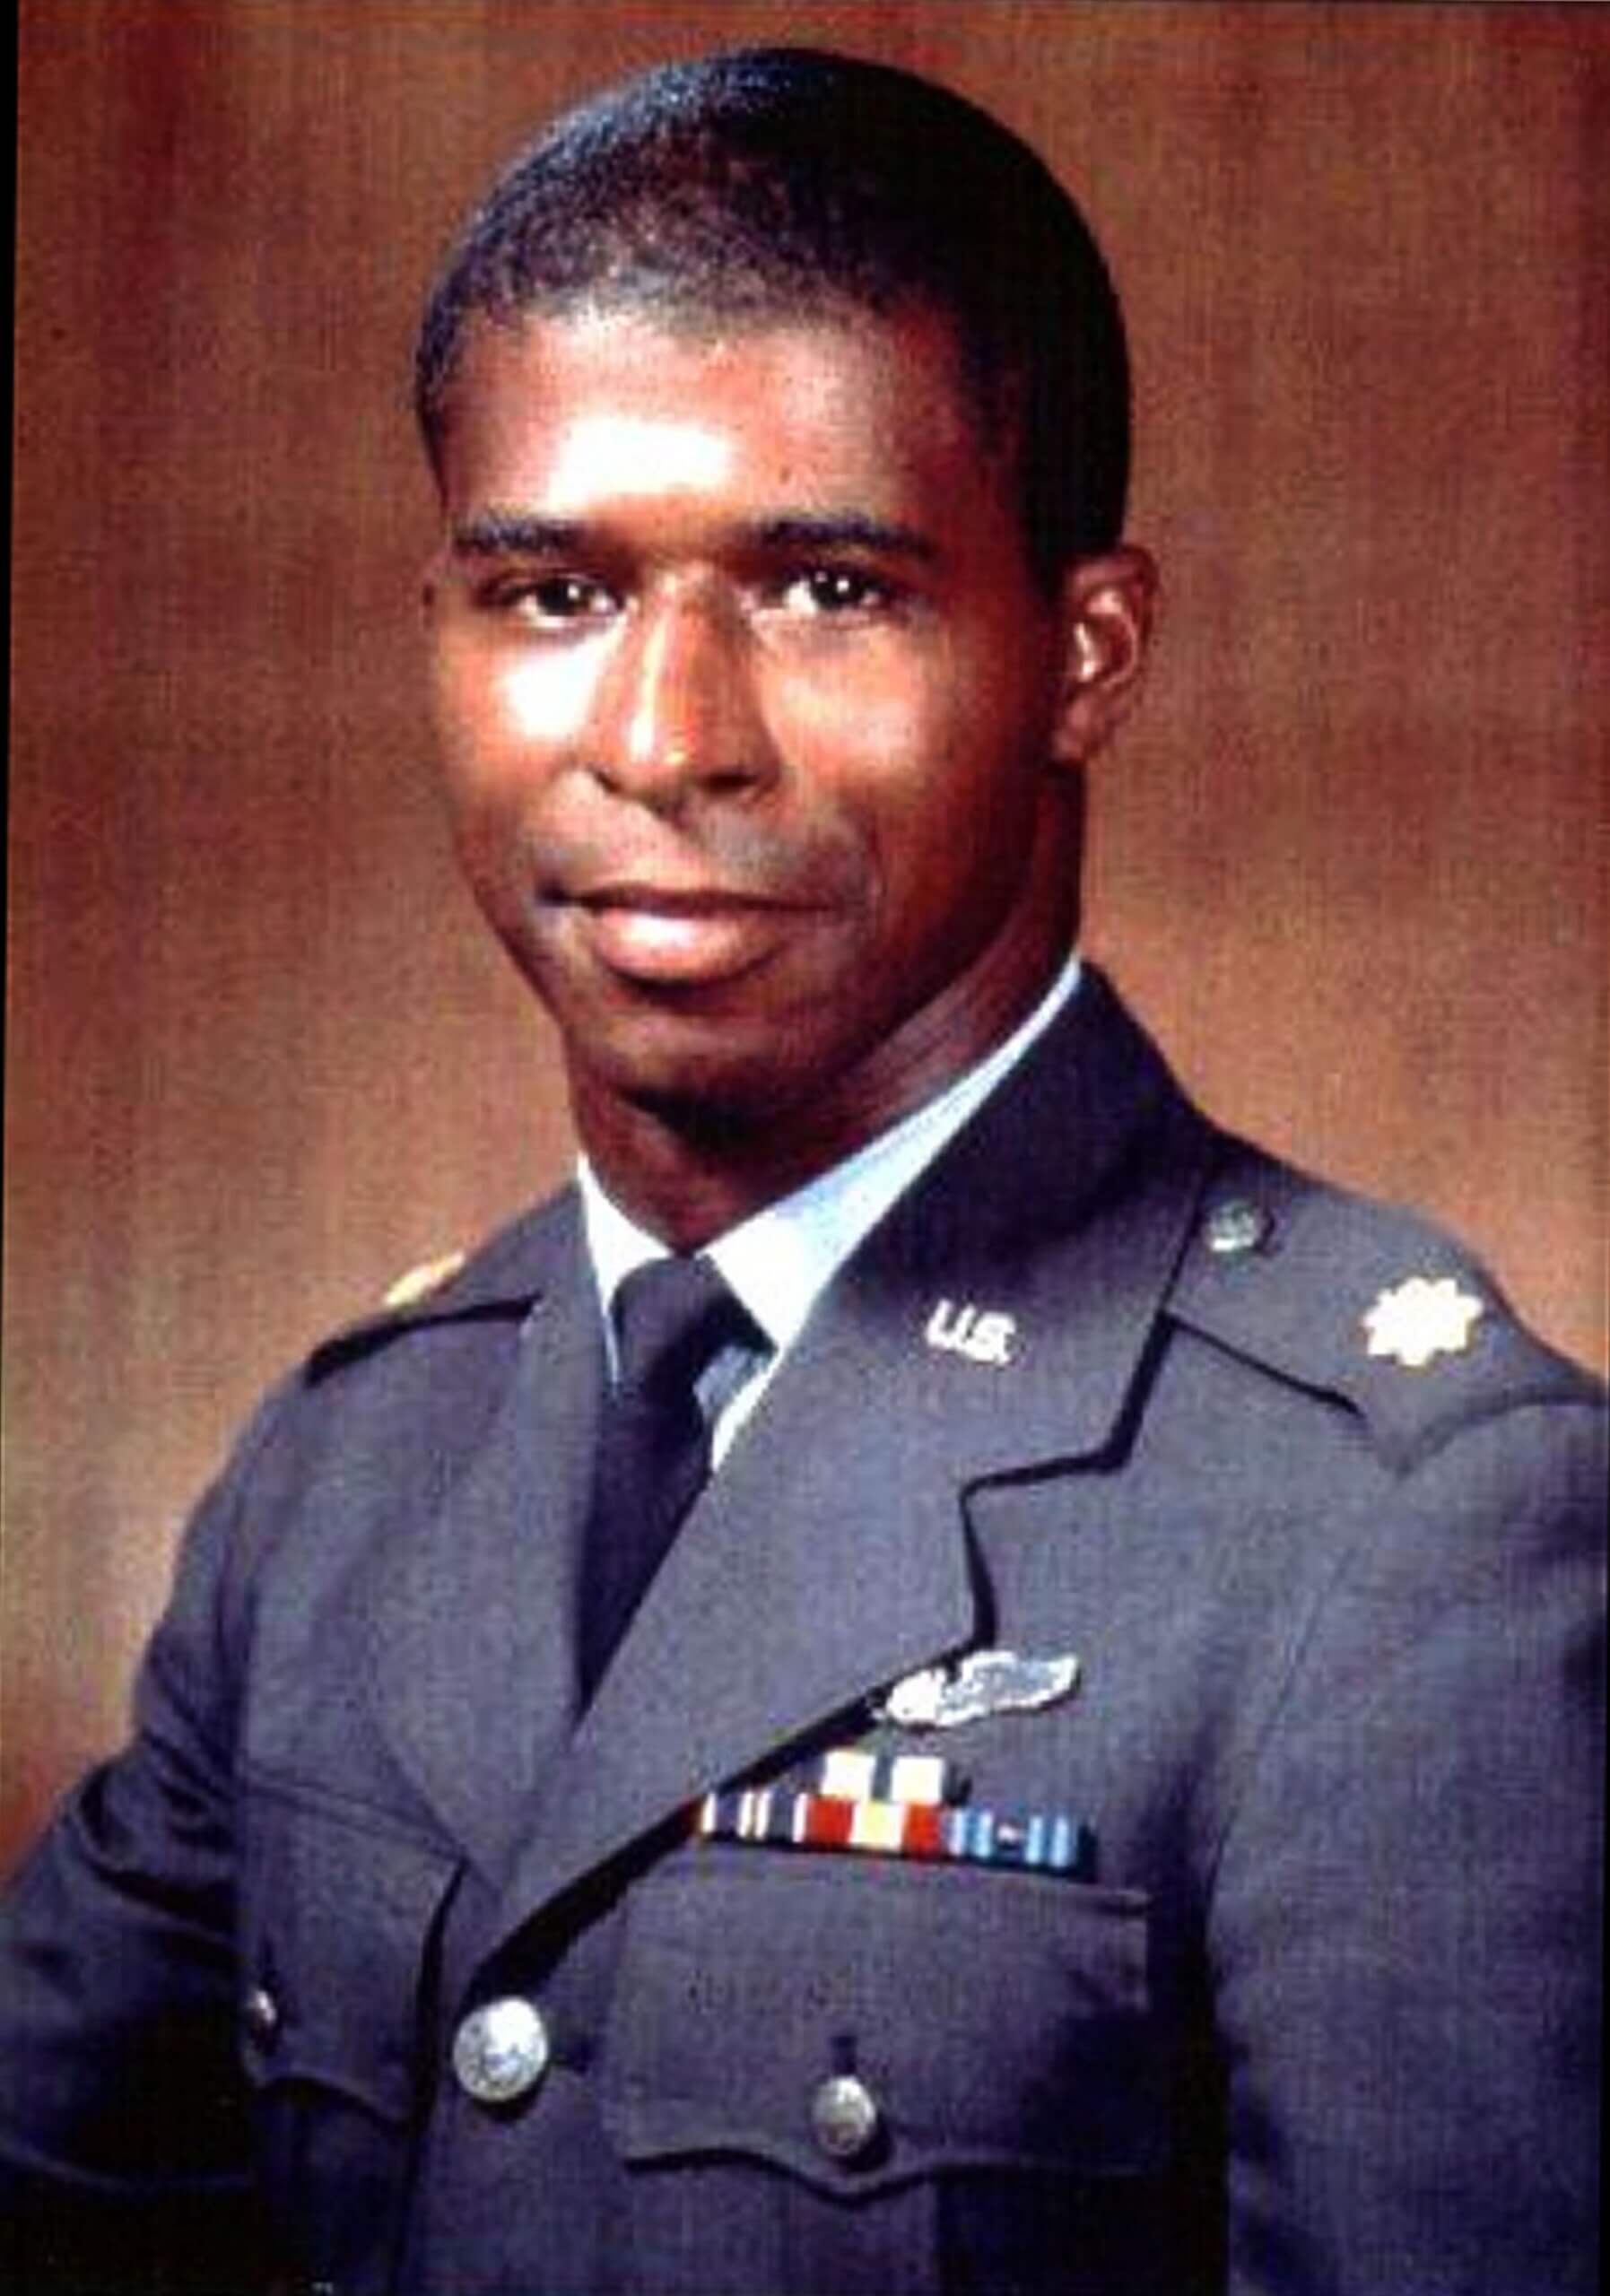 Robert Lawrence wearing his Air Force uniform